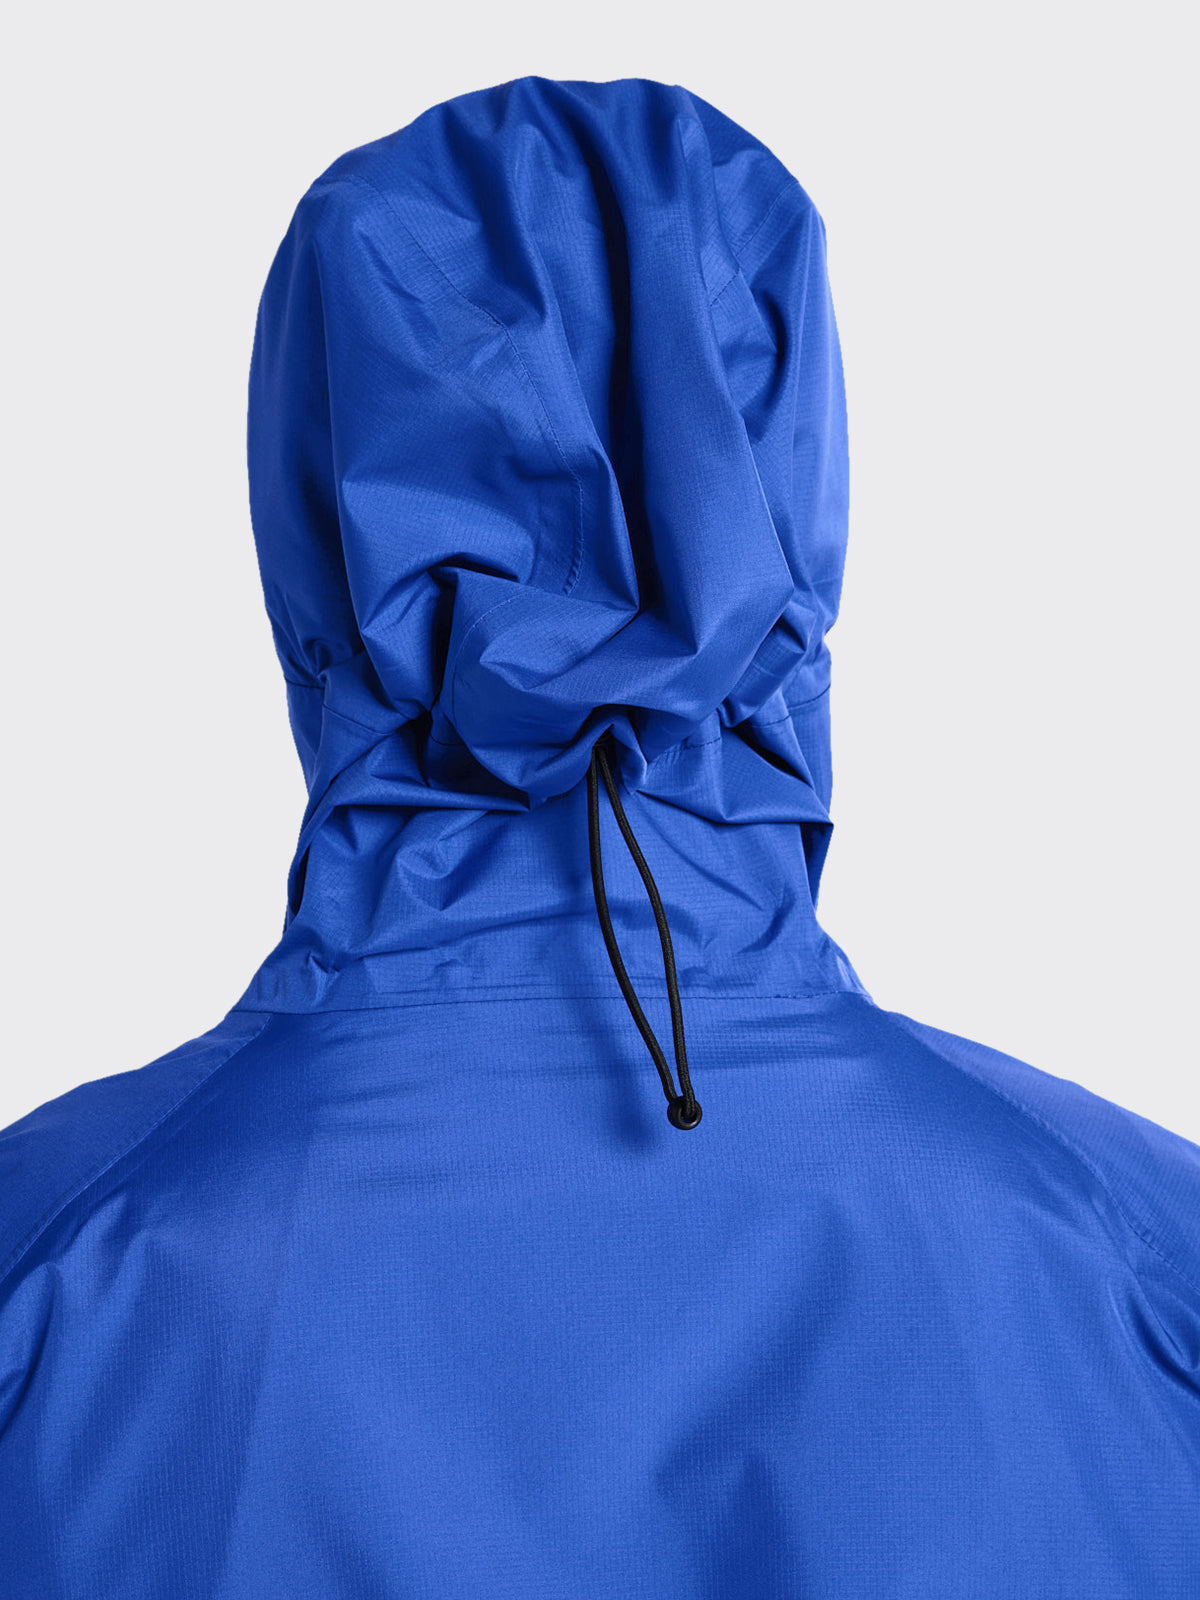 Model wearing Helleren RS jacket from Blæst in the color Dawn Blue